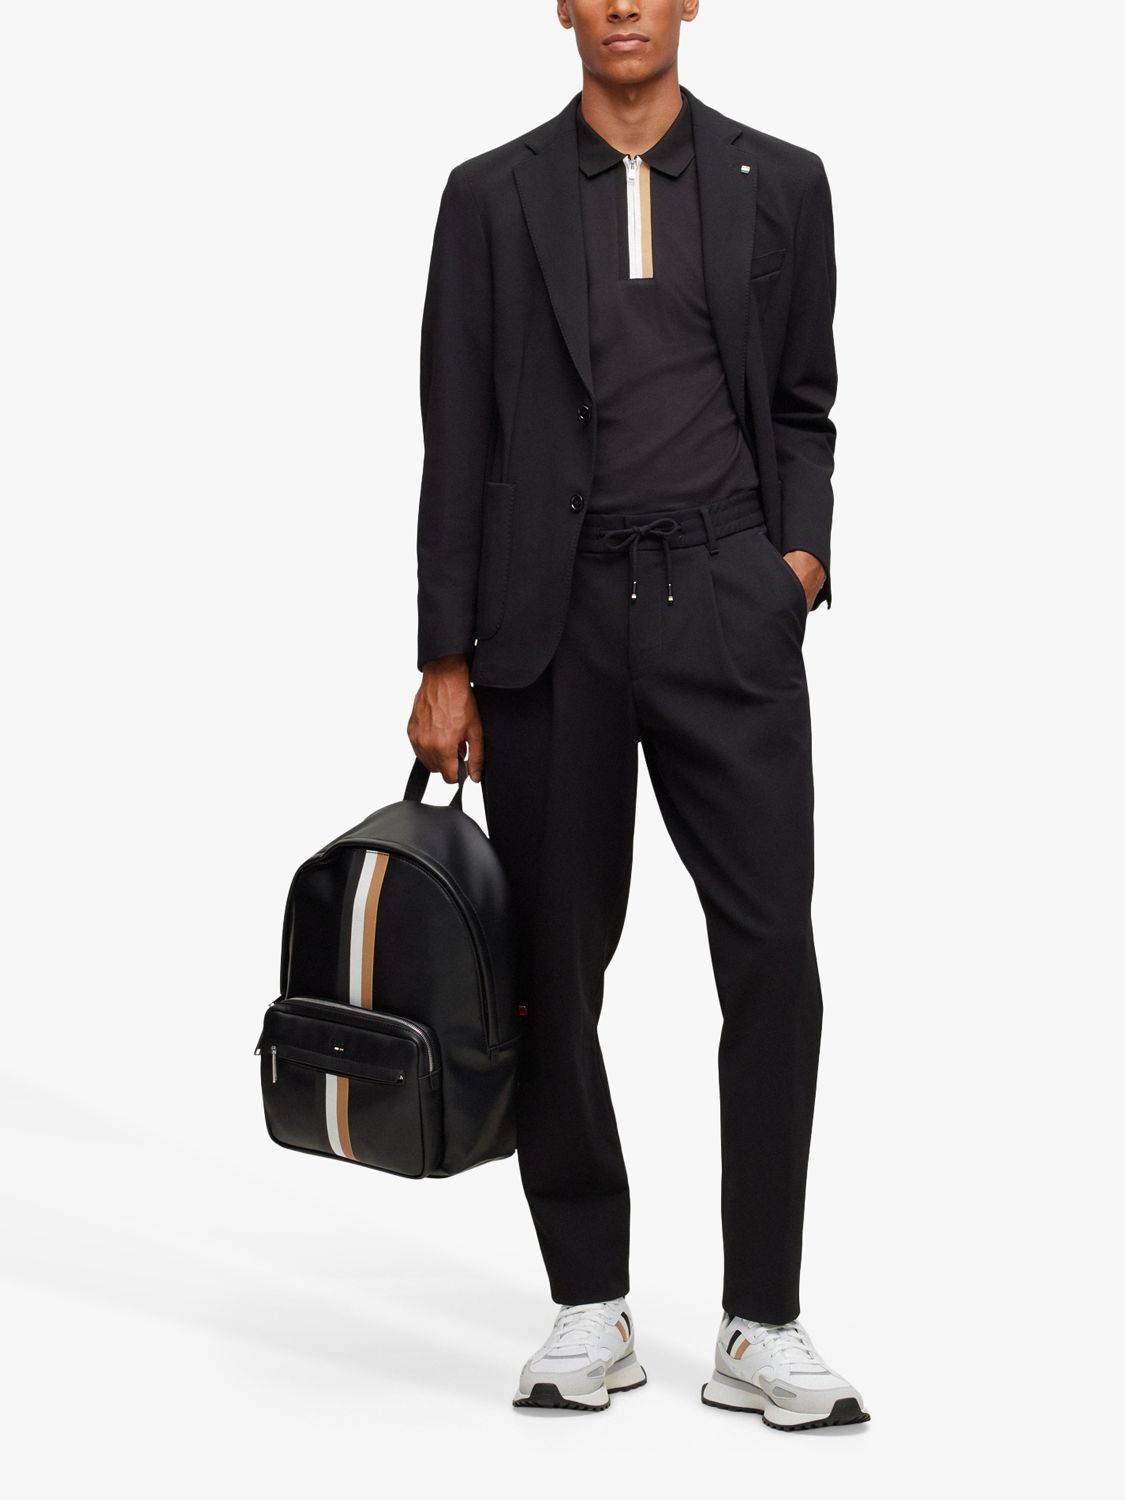 BOSS Paras Short Sleeve Zipper Polo Shirt, Black at John Lewis & Partners